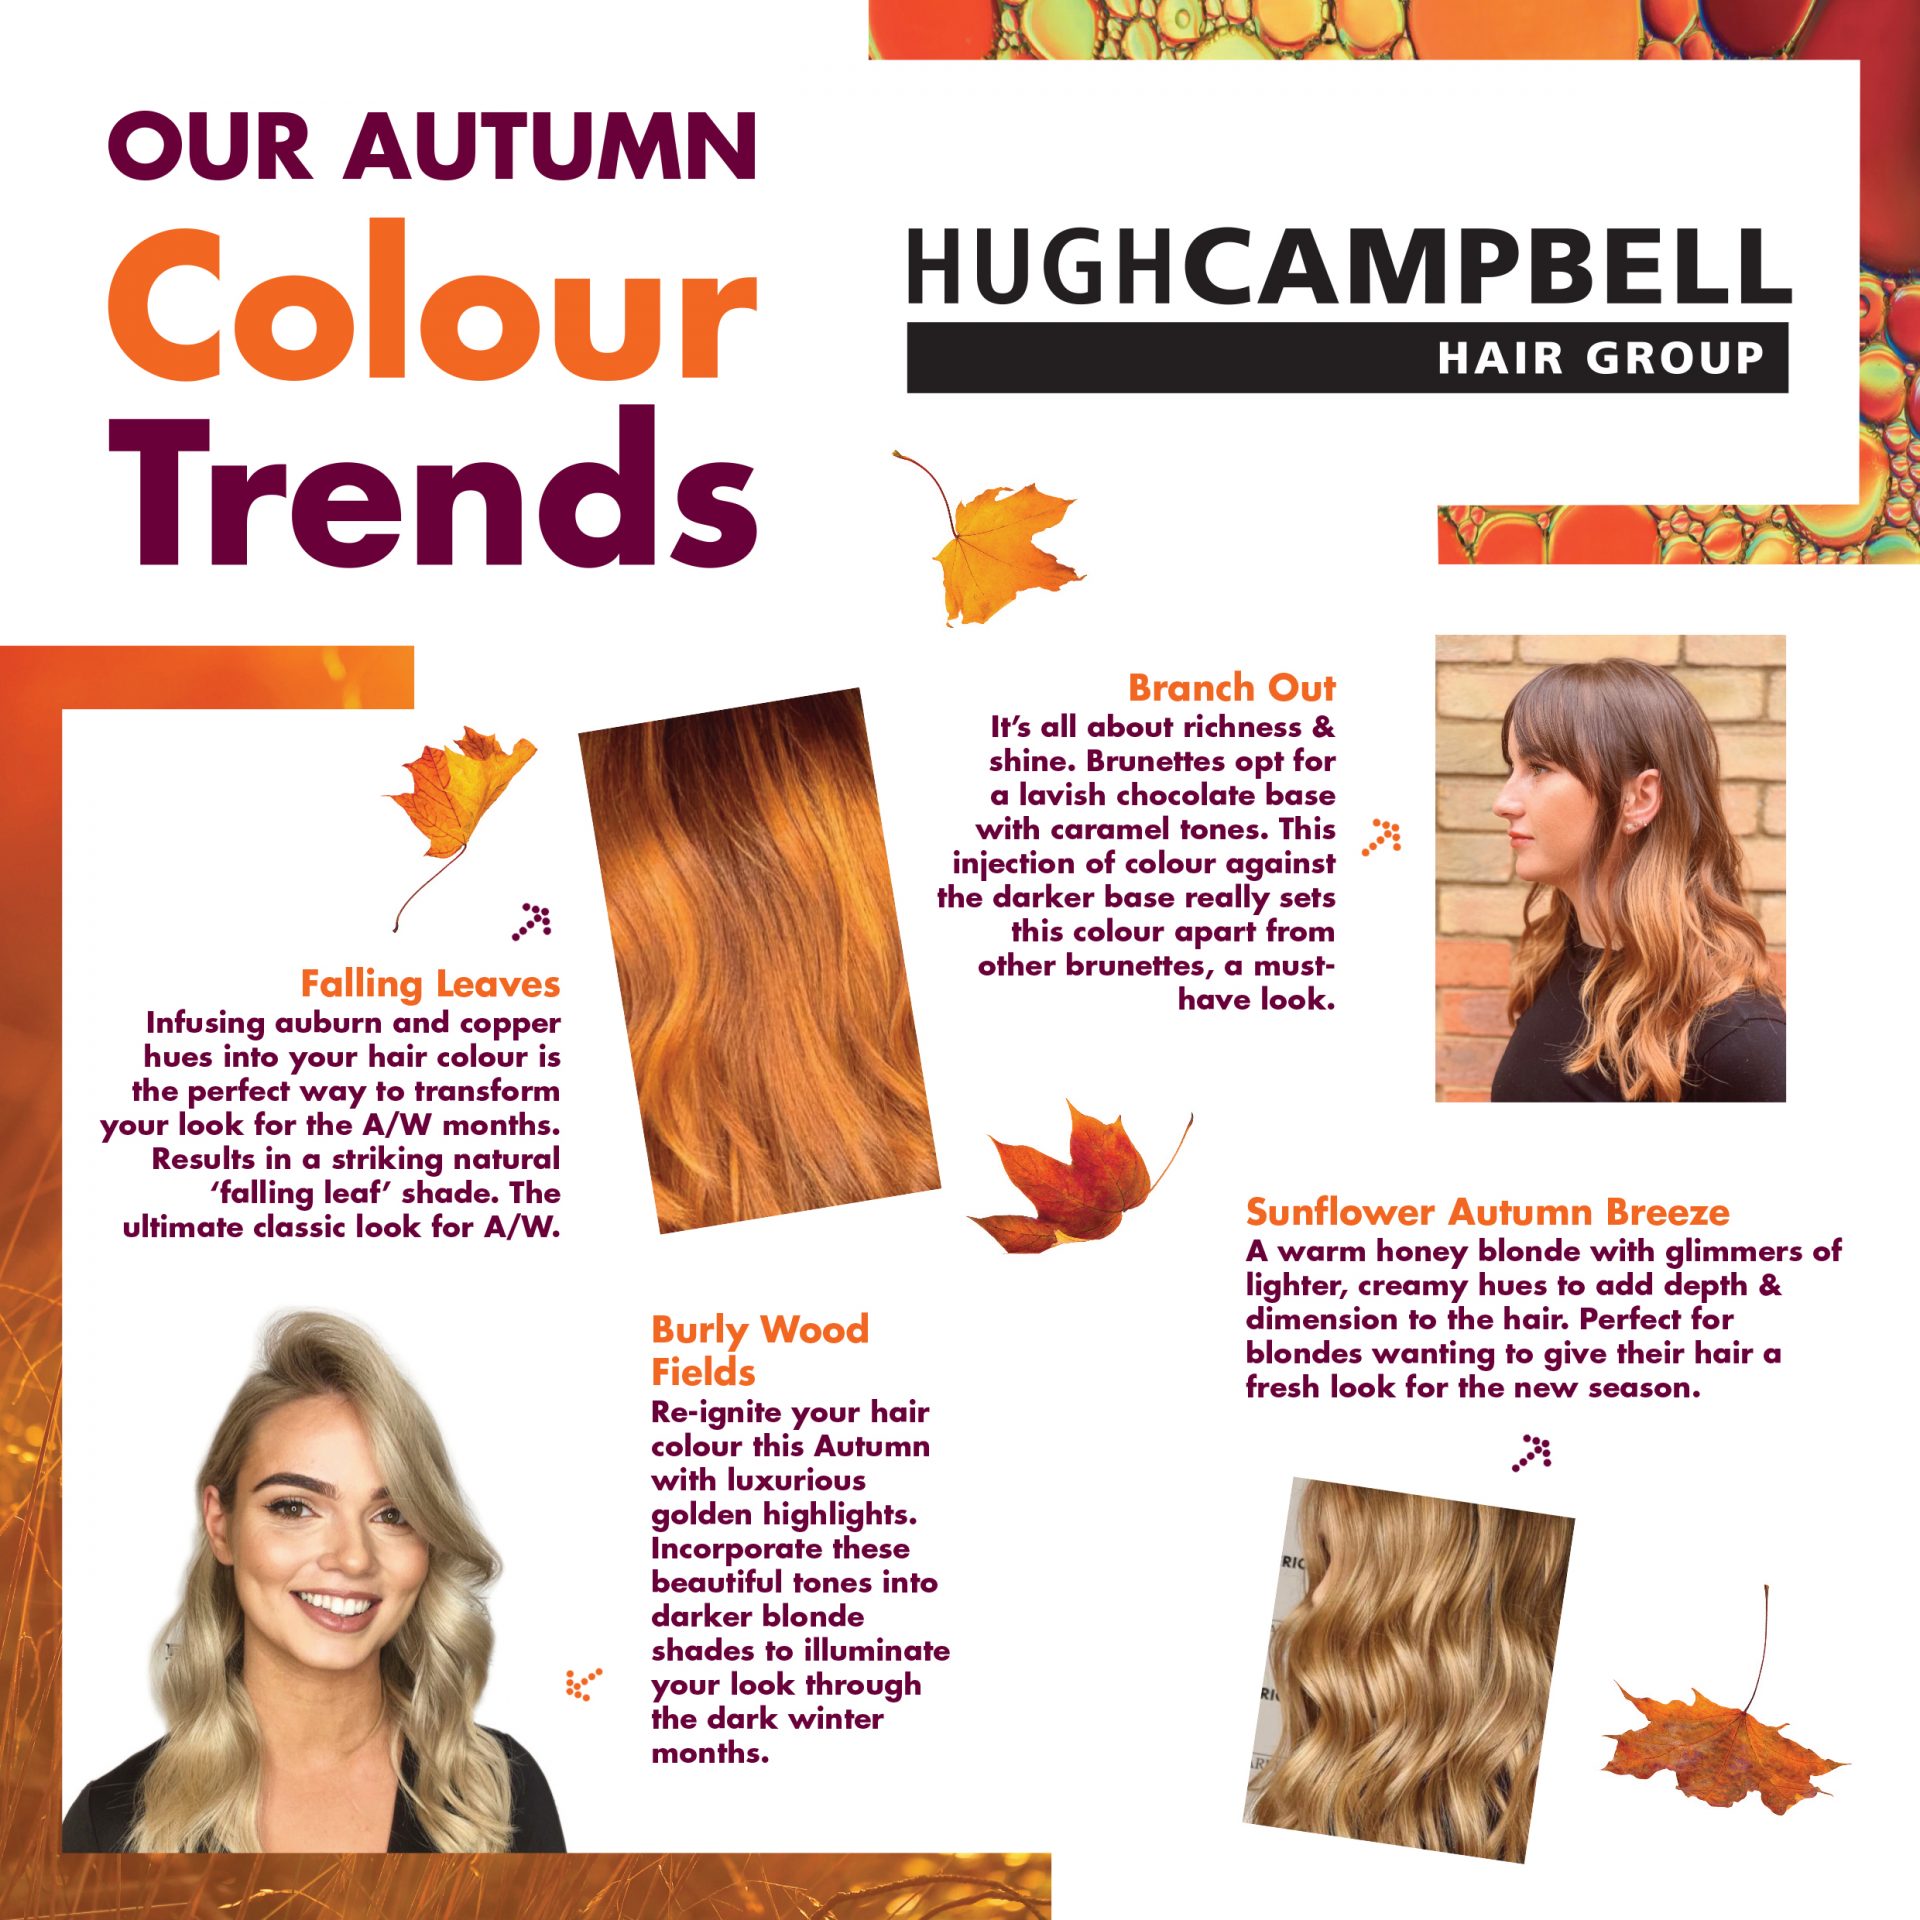 Our Autumn Hair Colour Trends 2019 - Hugh Campbell